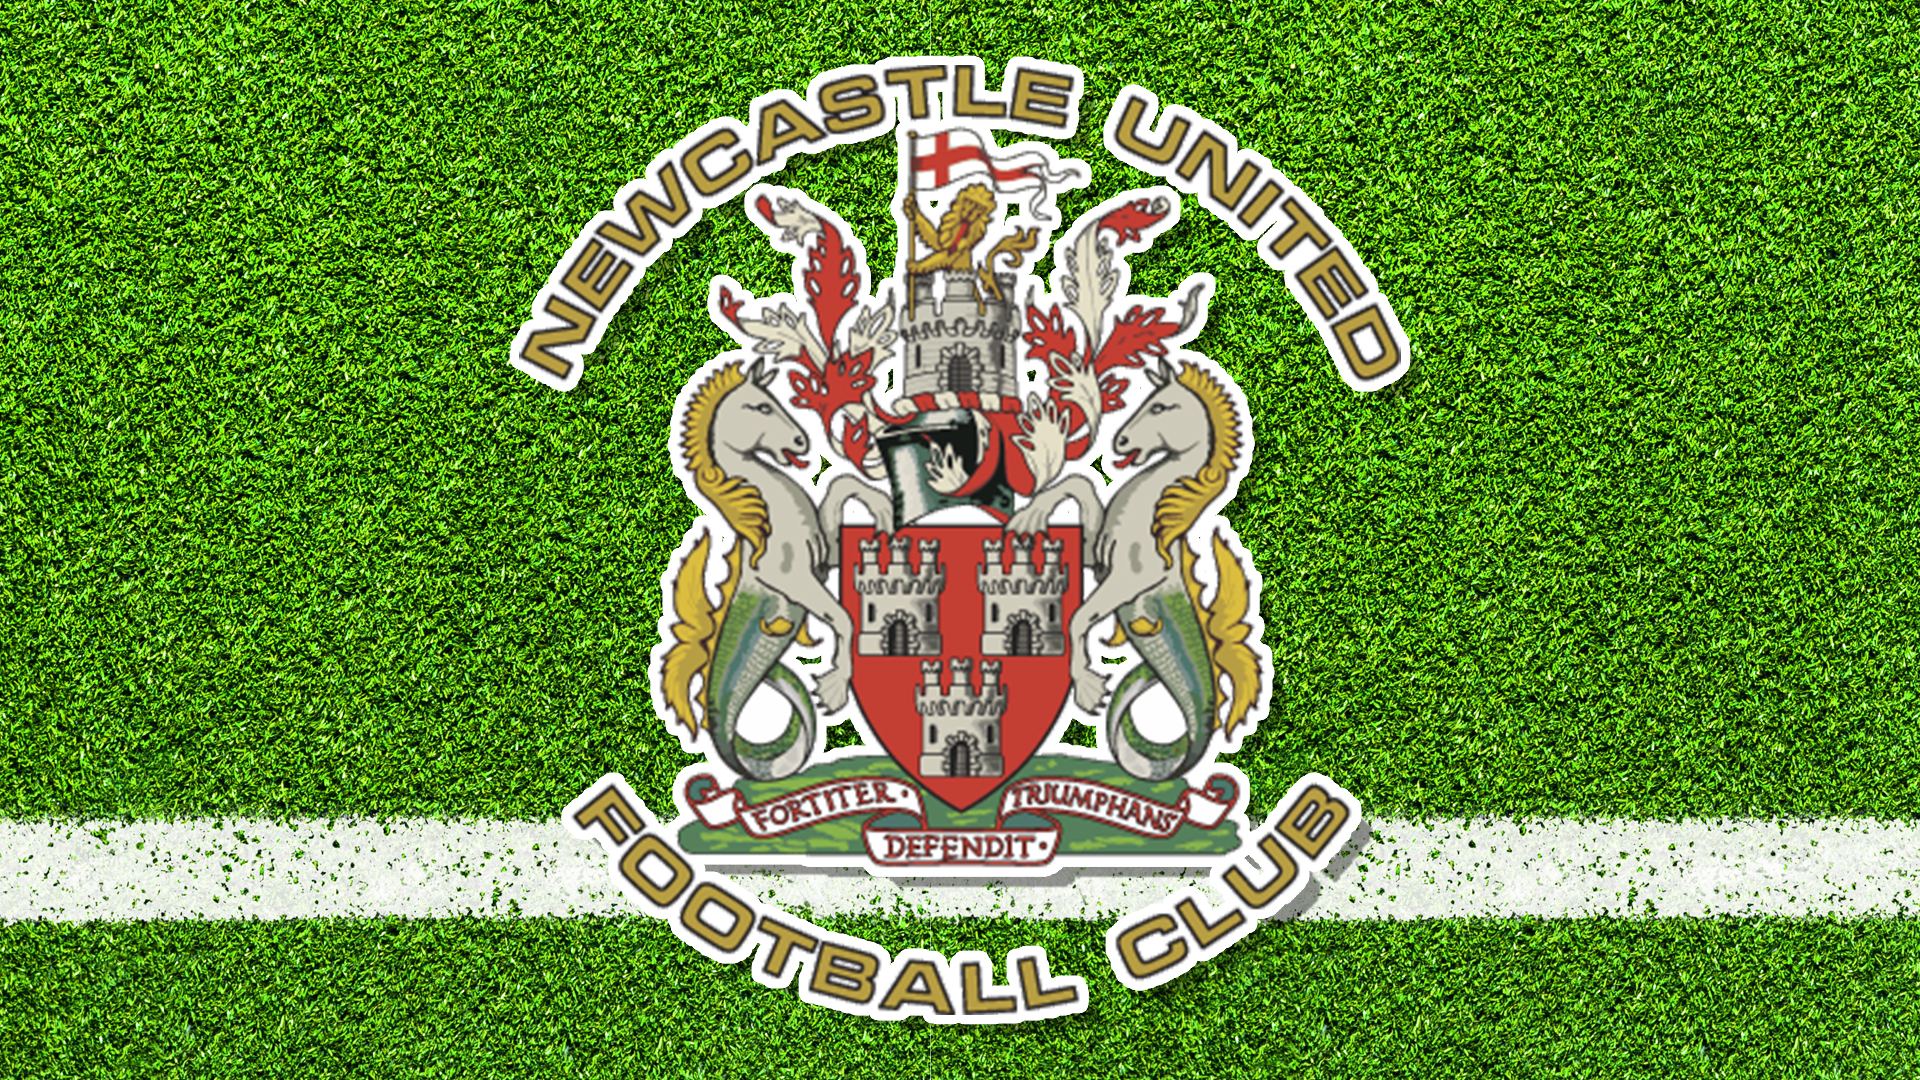 A Newcastle United club badge